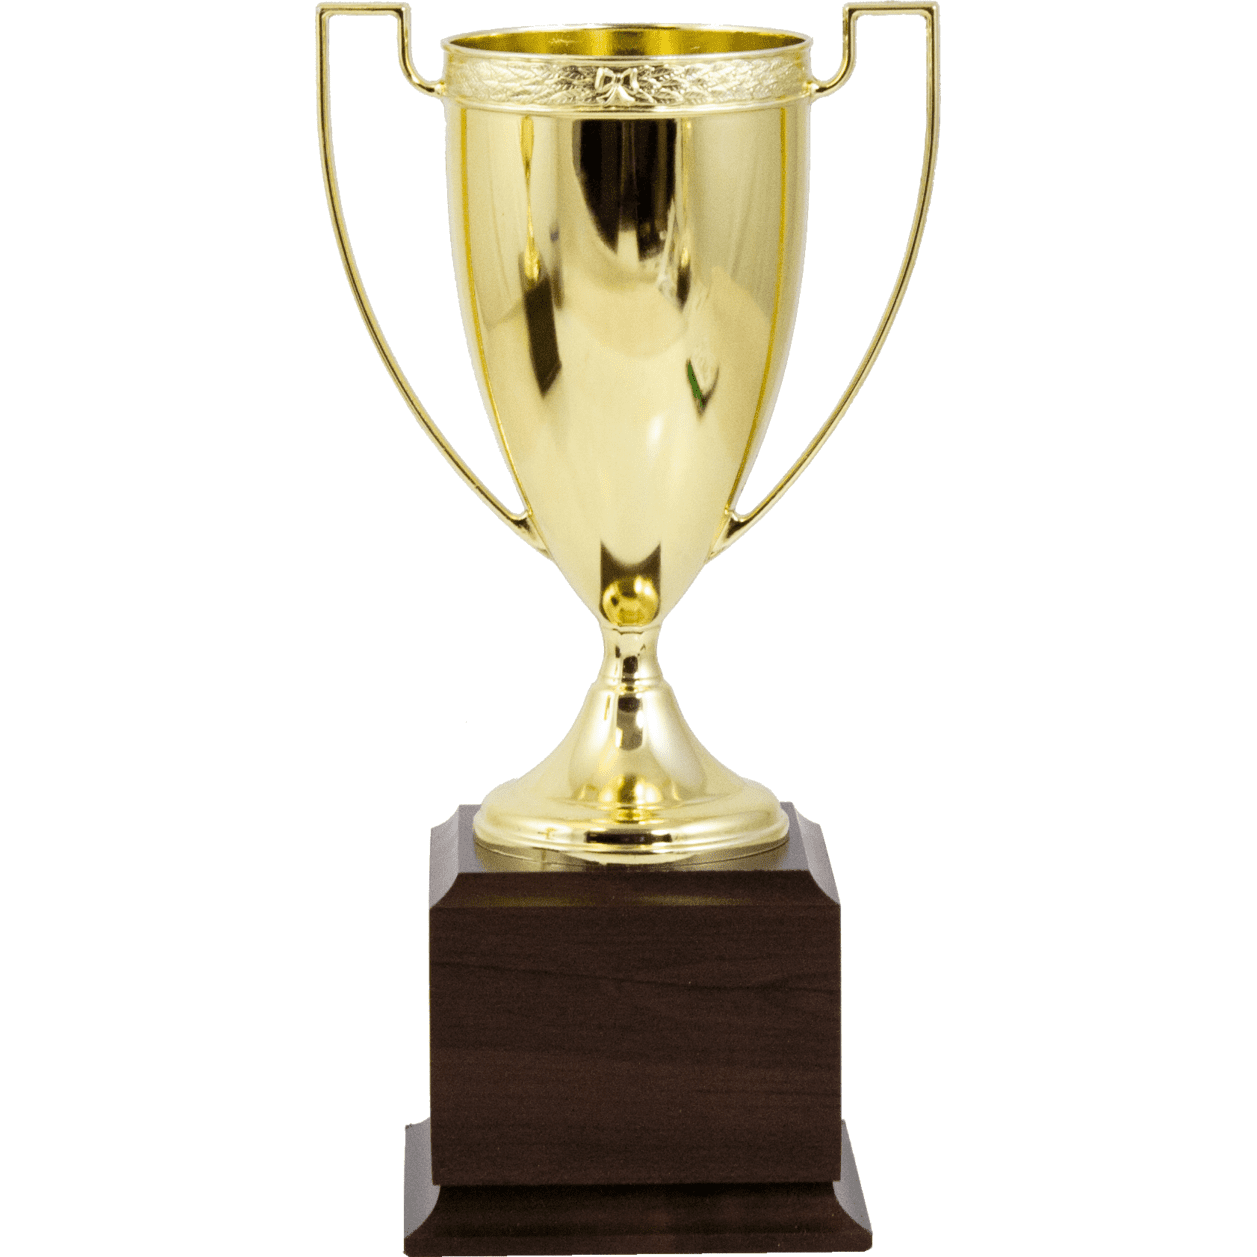 Classic Gold Metal Award Cup | Alliance Awards LLC.